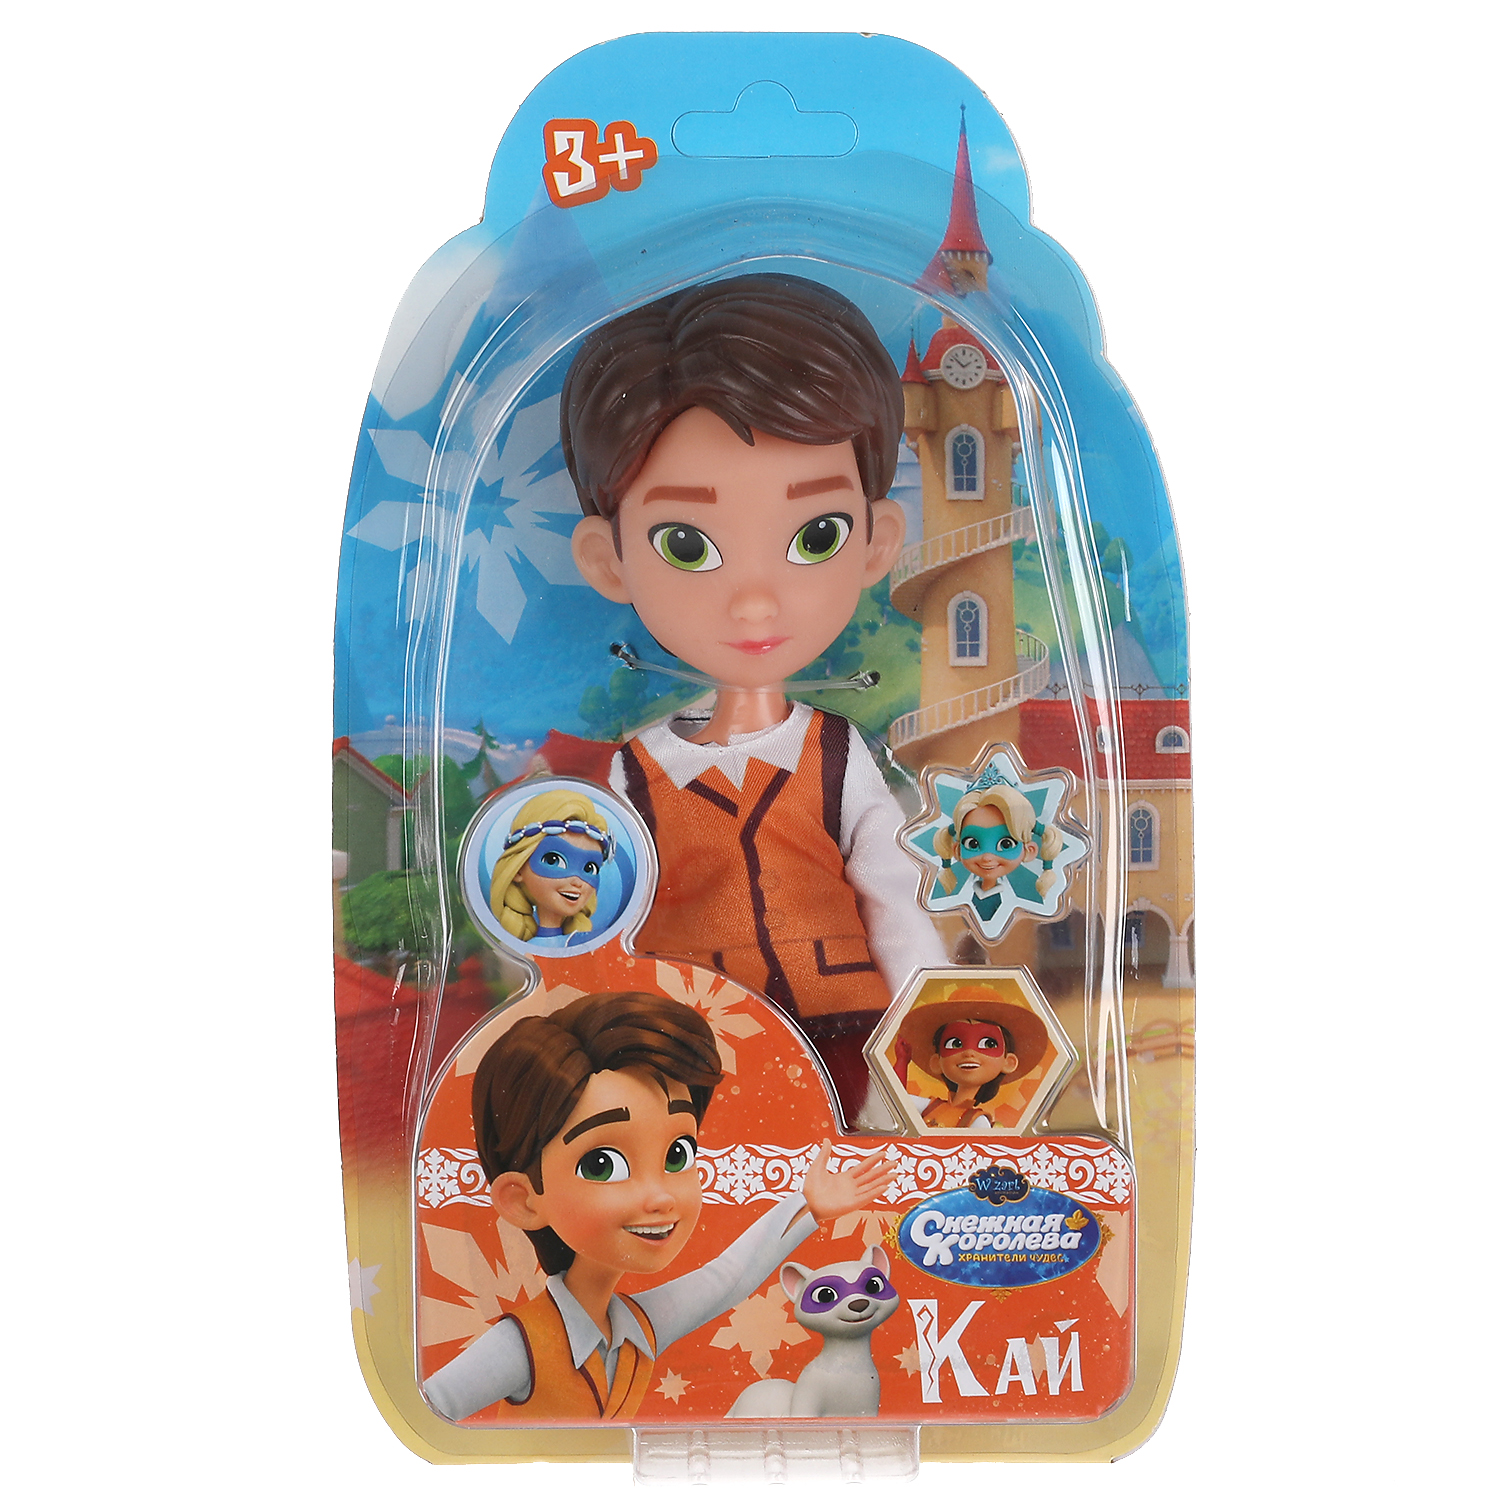 Кукла Карапуз Кай SQ-KAI15-RU, 15 см